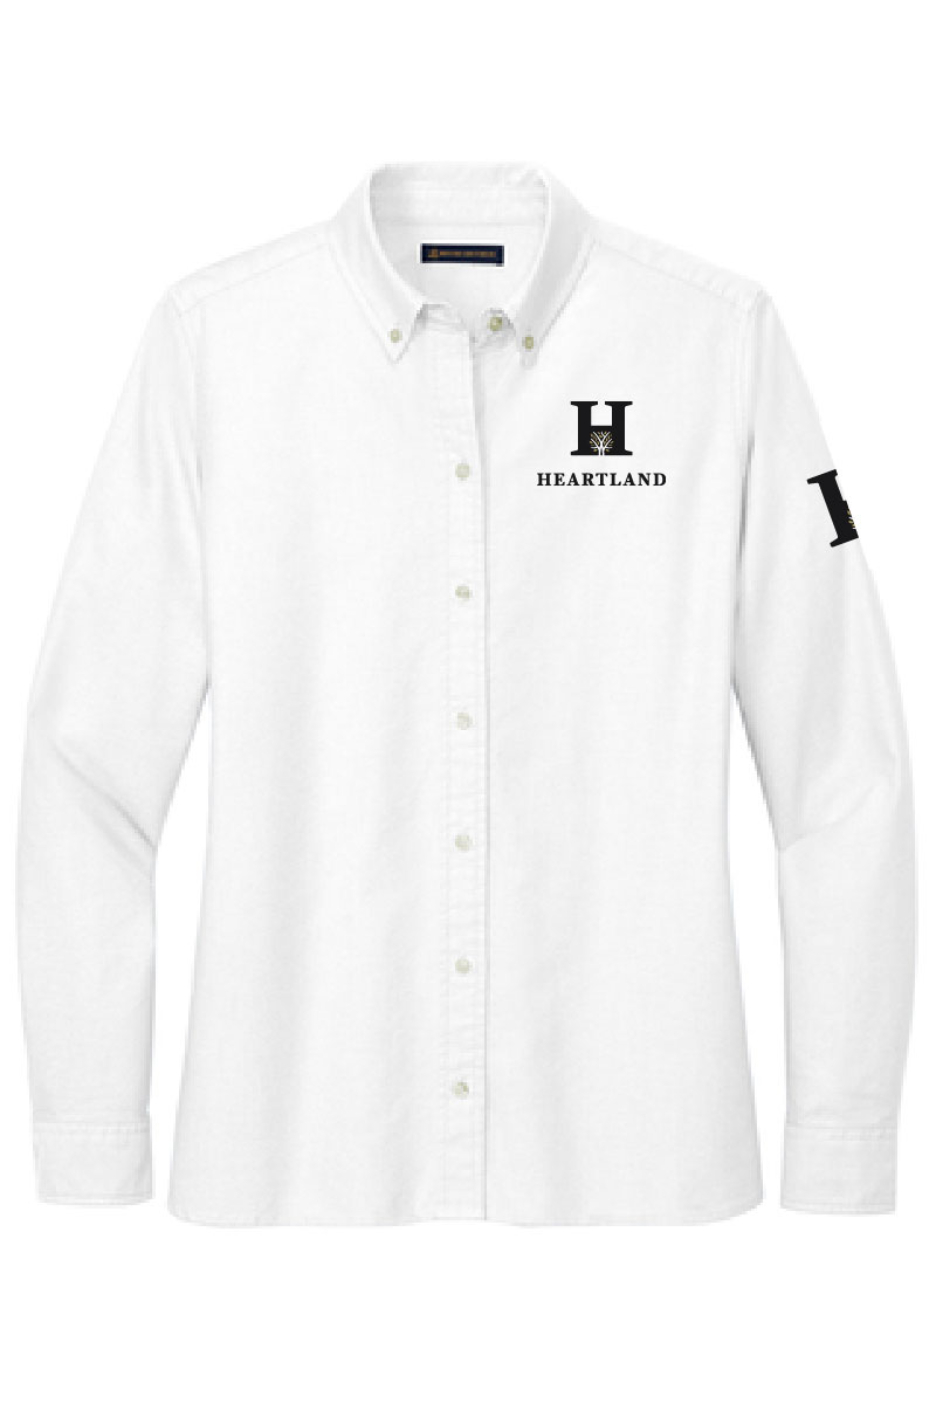 Heartland - Womens Brooks Brothers® Women’s Casual Oxford Cloth Shirt - BB18005